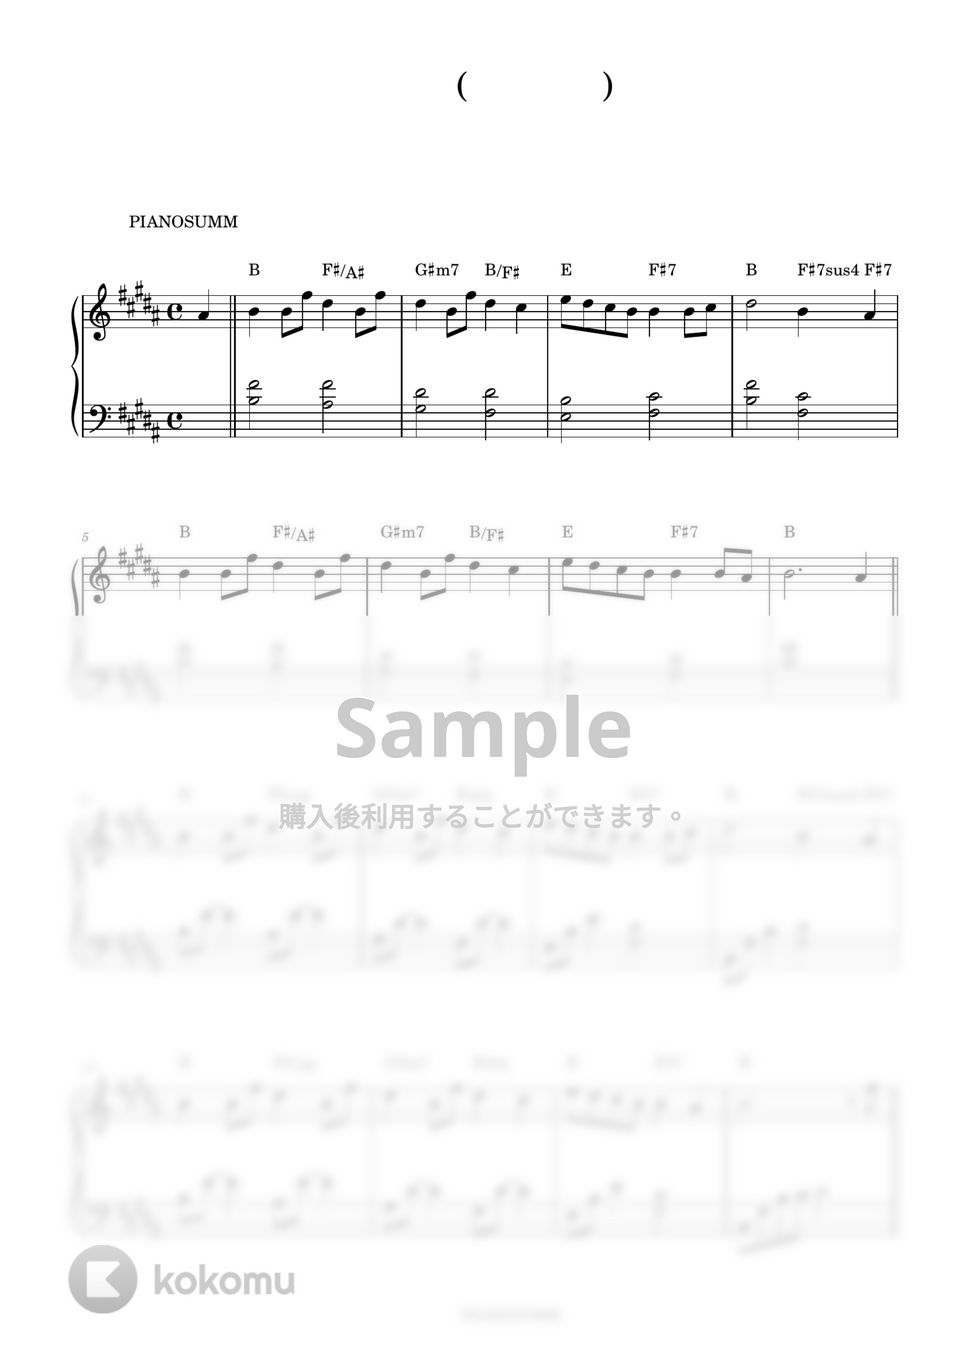 IU(아이유) - Next Stop(정거장) (Easy ver. Includes Ckey) by PIANOSUMM